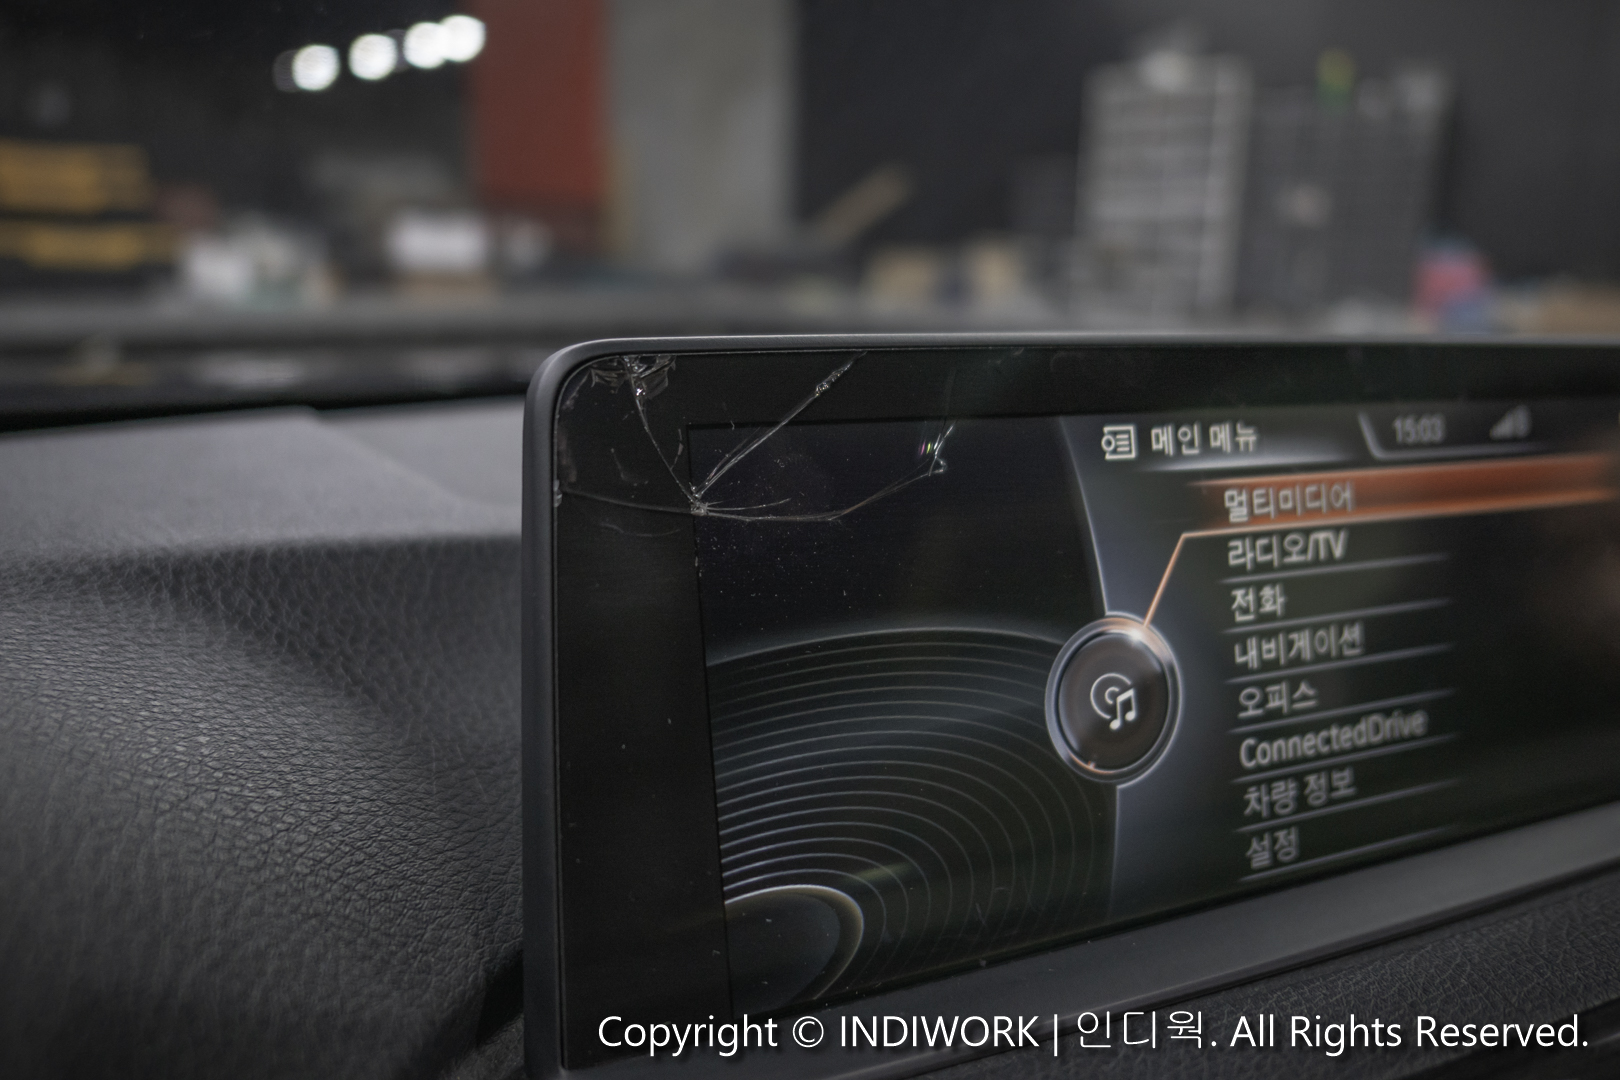 Repair to Broken Screen Glass 2014 BMW F32 -After